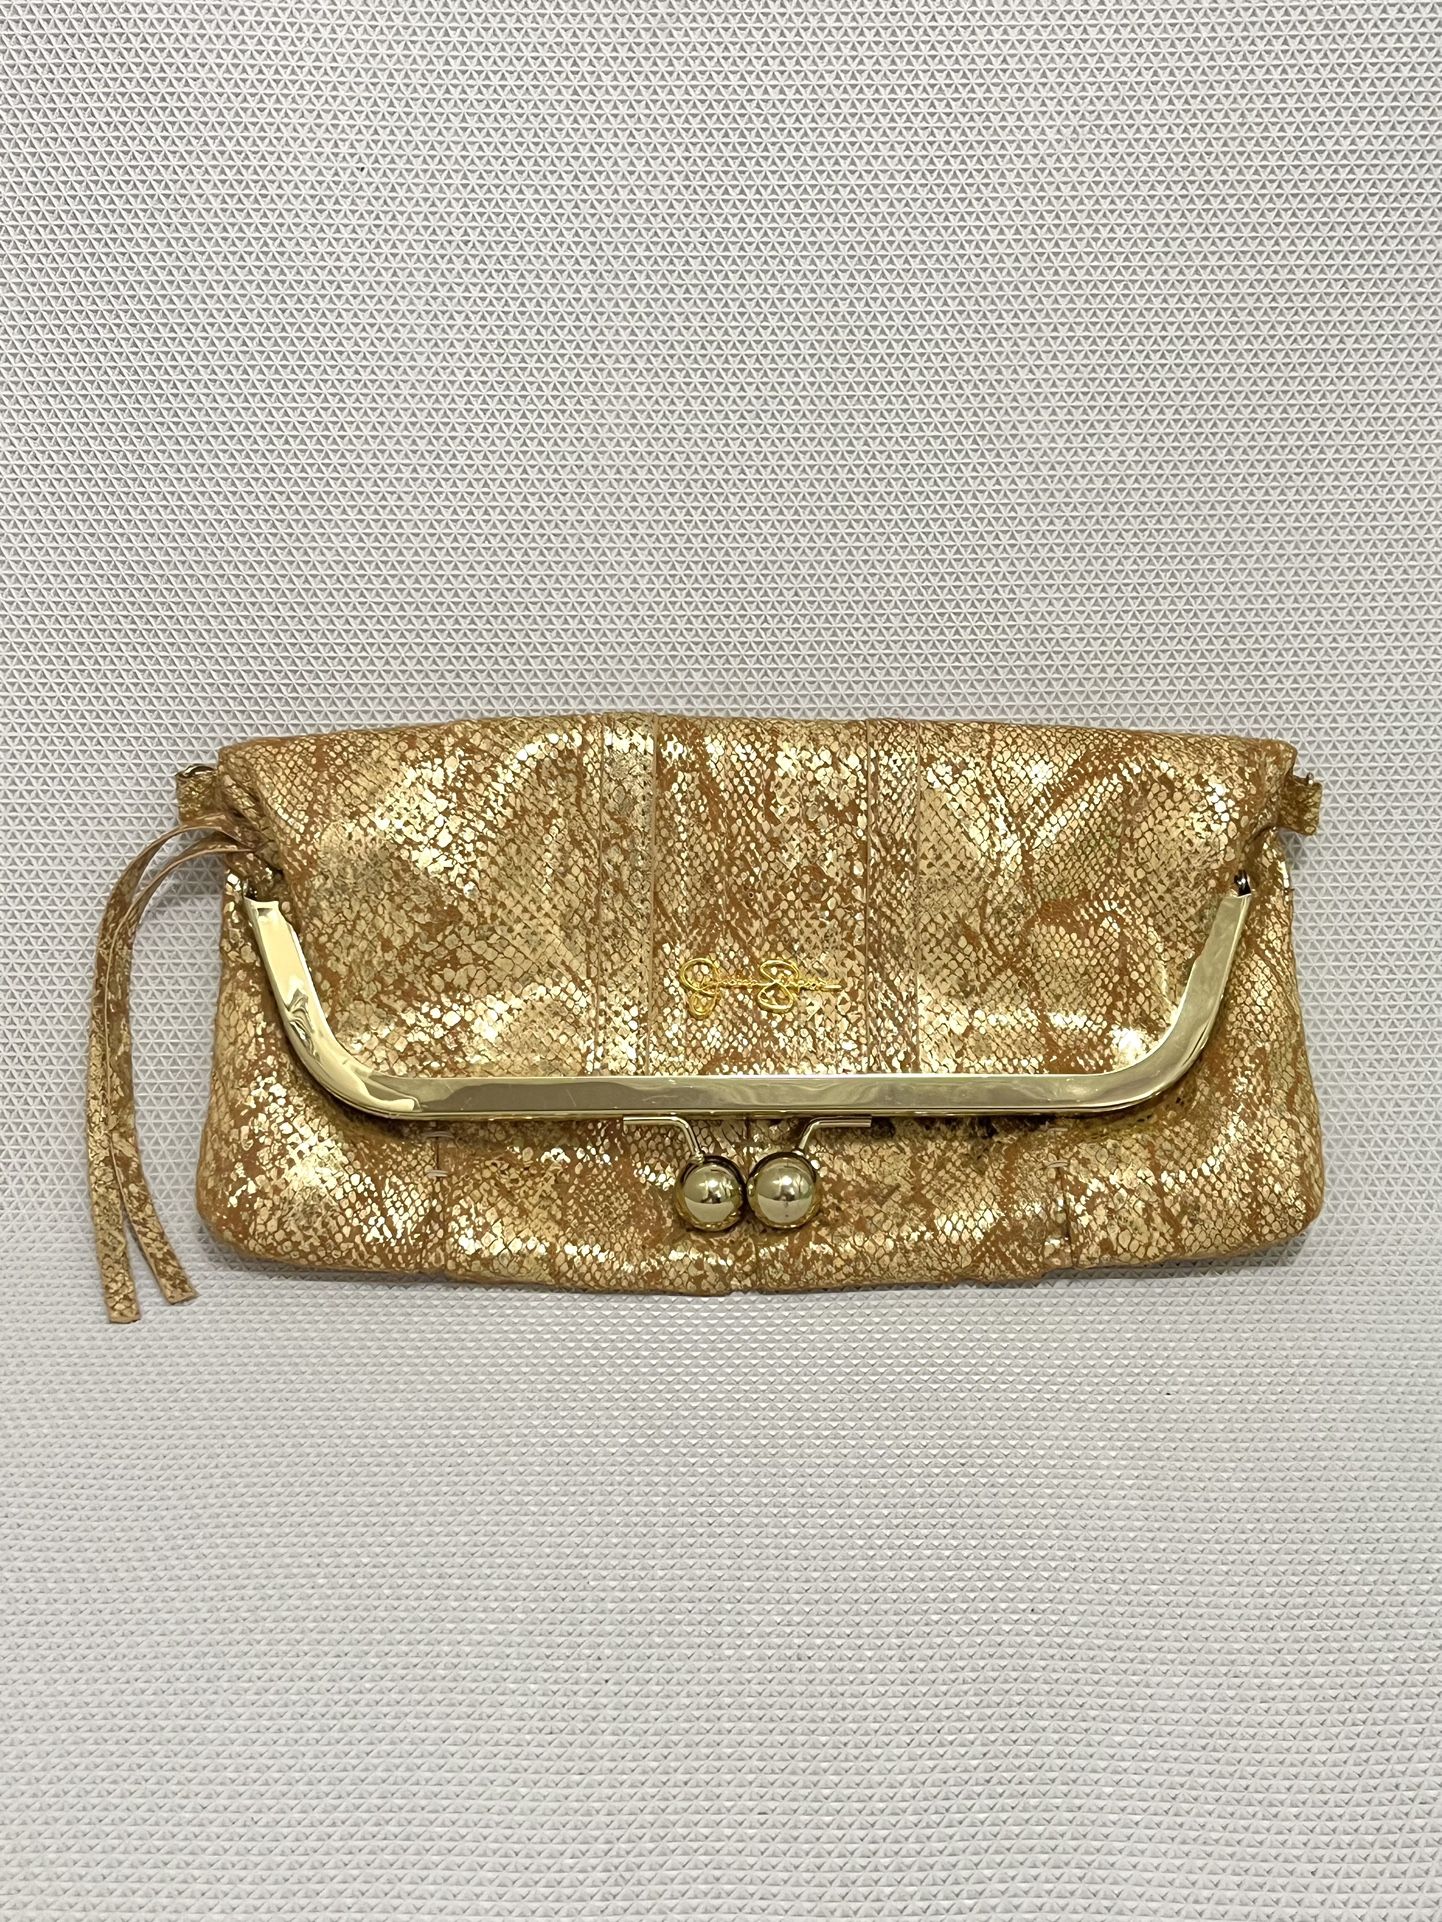 Jessica Simpson Clutch Metallic Gold Bag